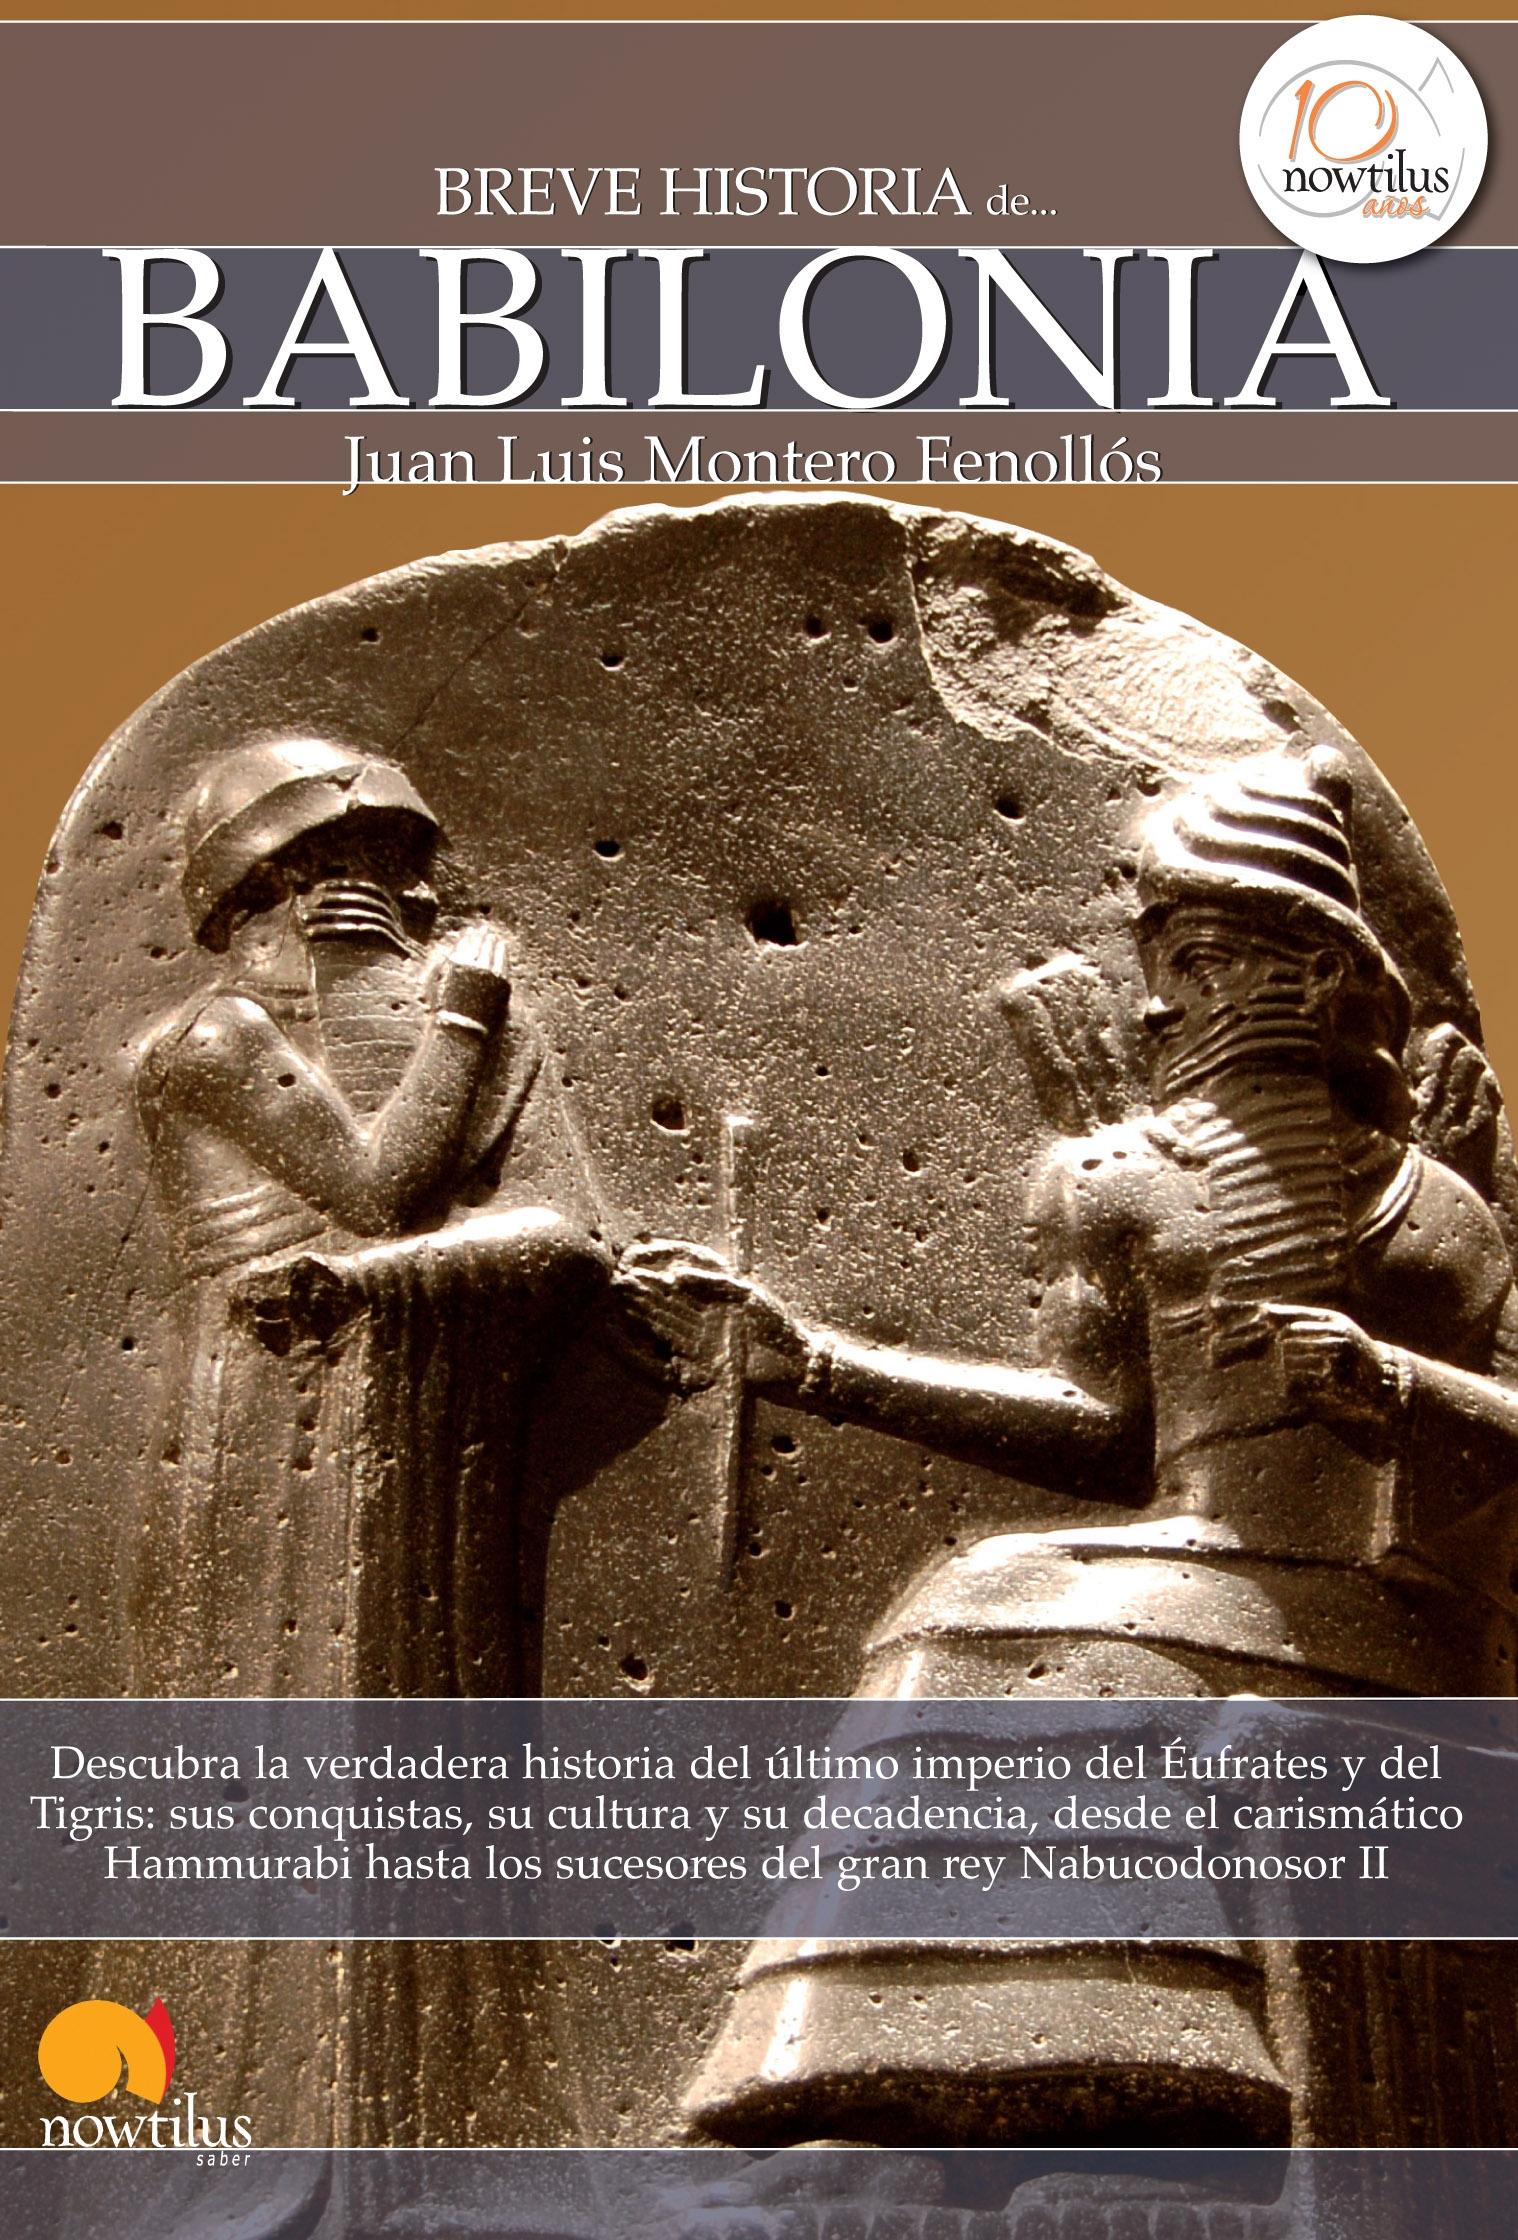 Breve Historia Babilonia. 